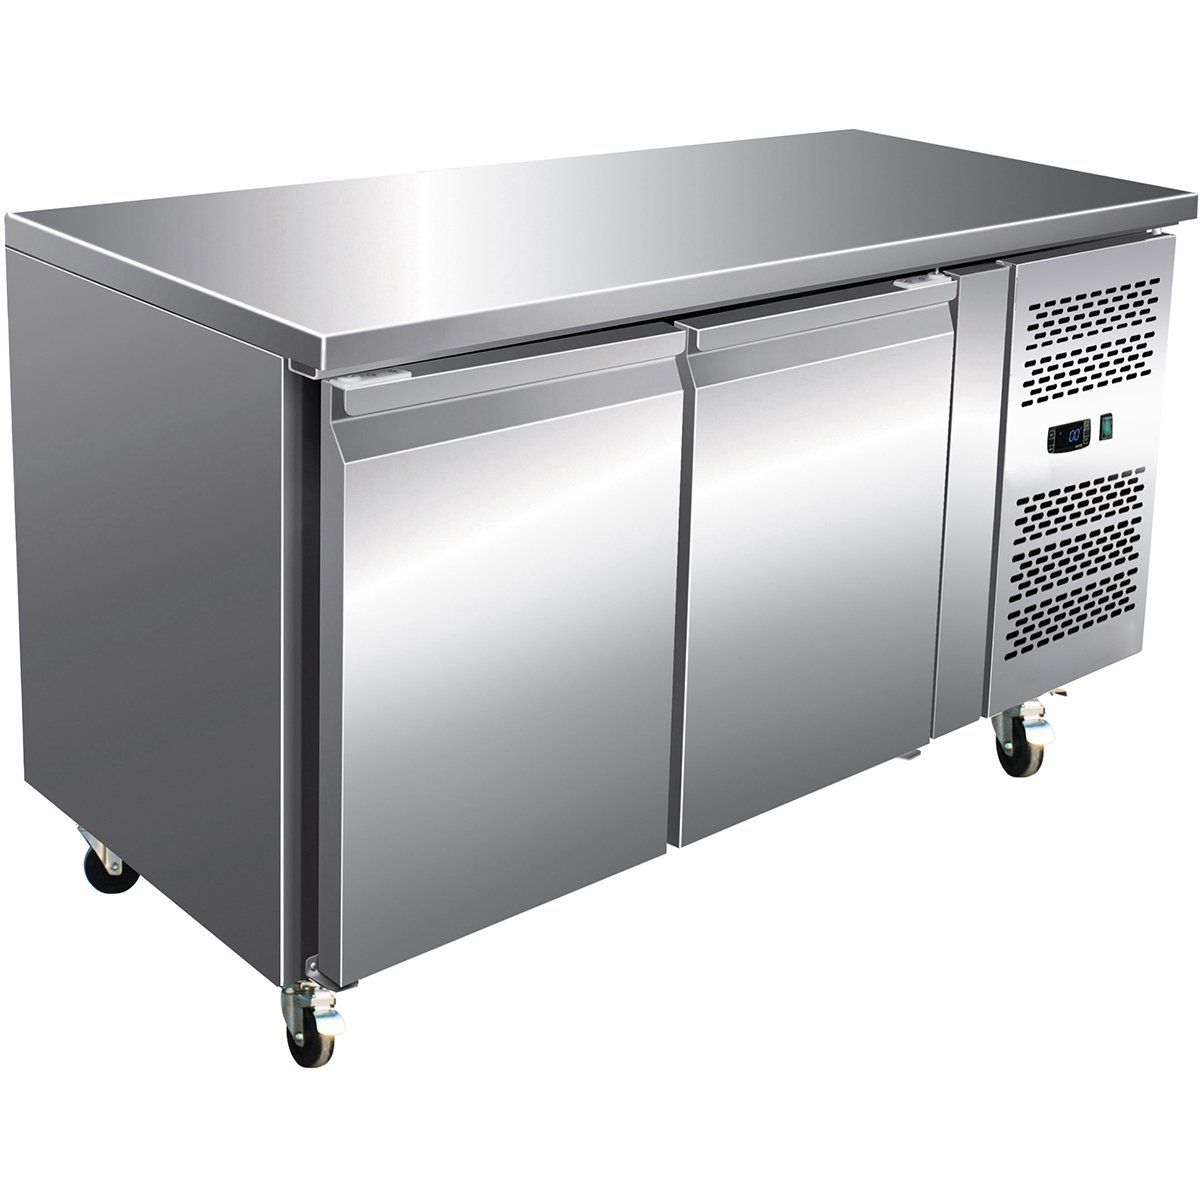 Stainless Steel Double Door Counter Refrigerator – GN2100TN